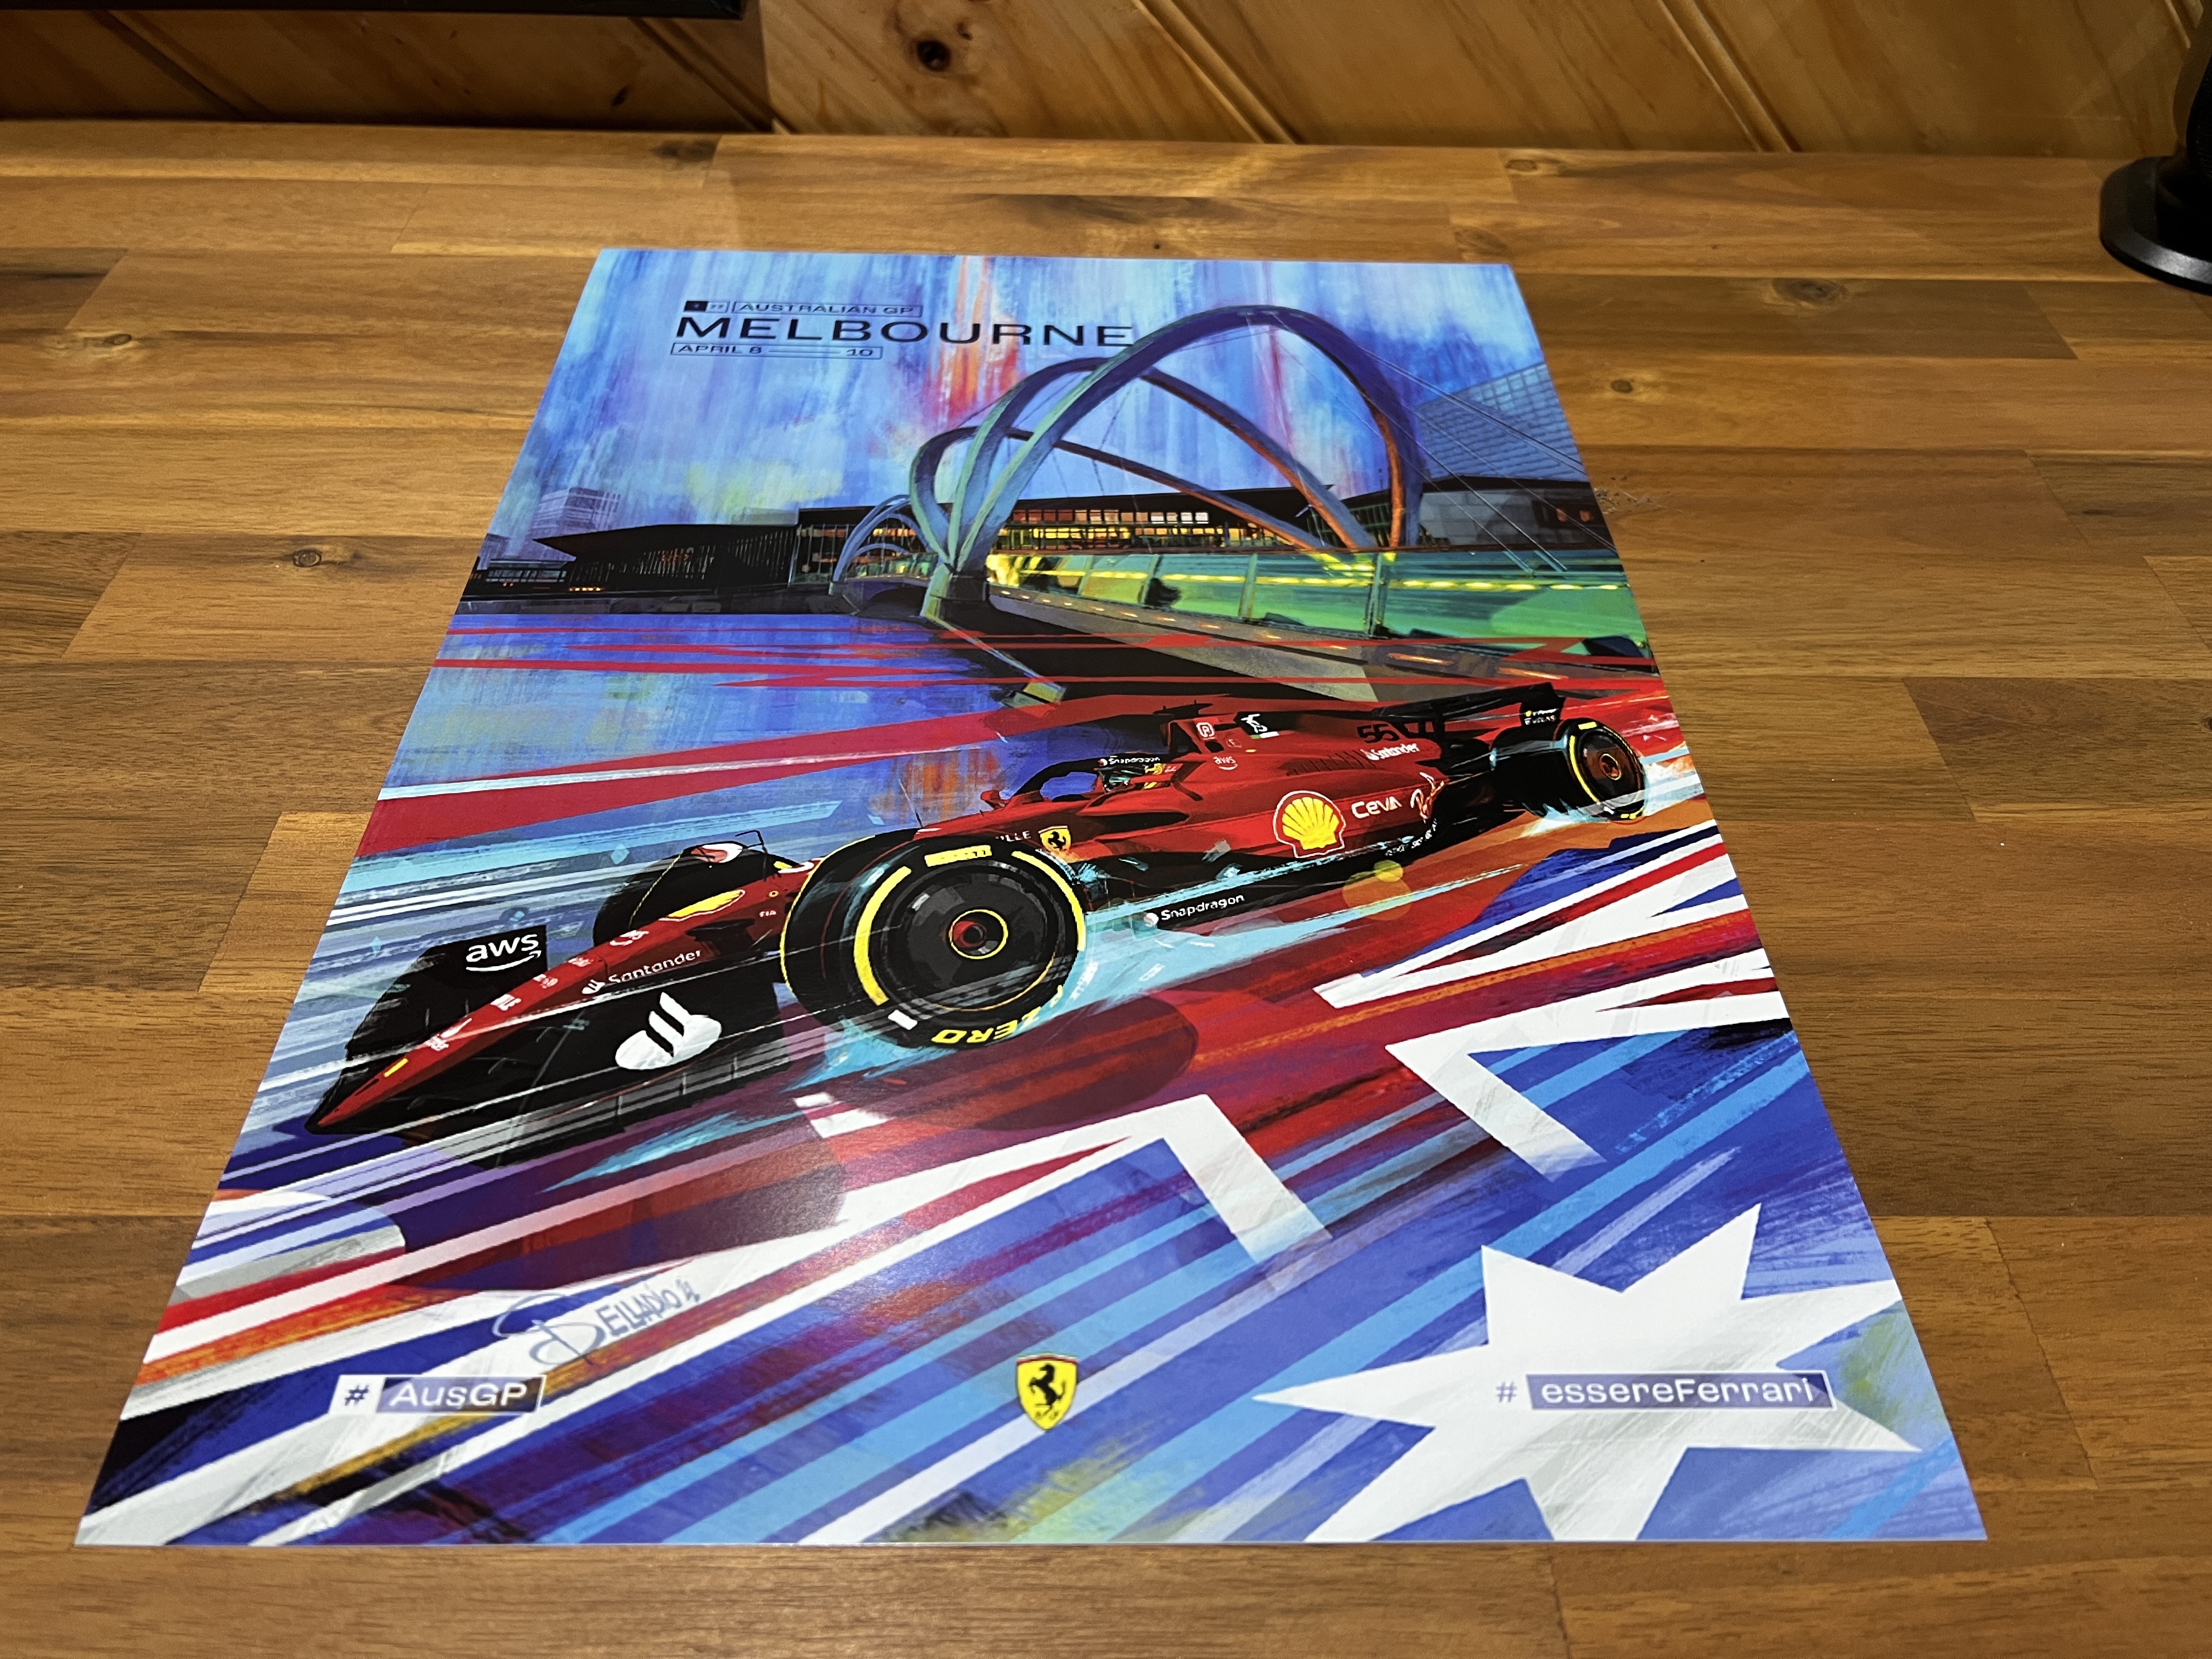 2022 Ferrari F1 RACE 3 Australia grand prix race poster cover art